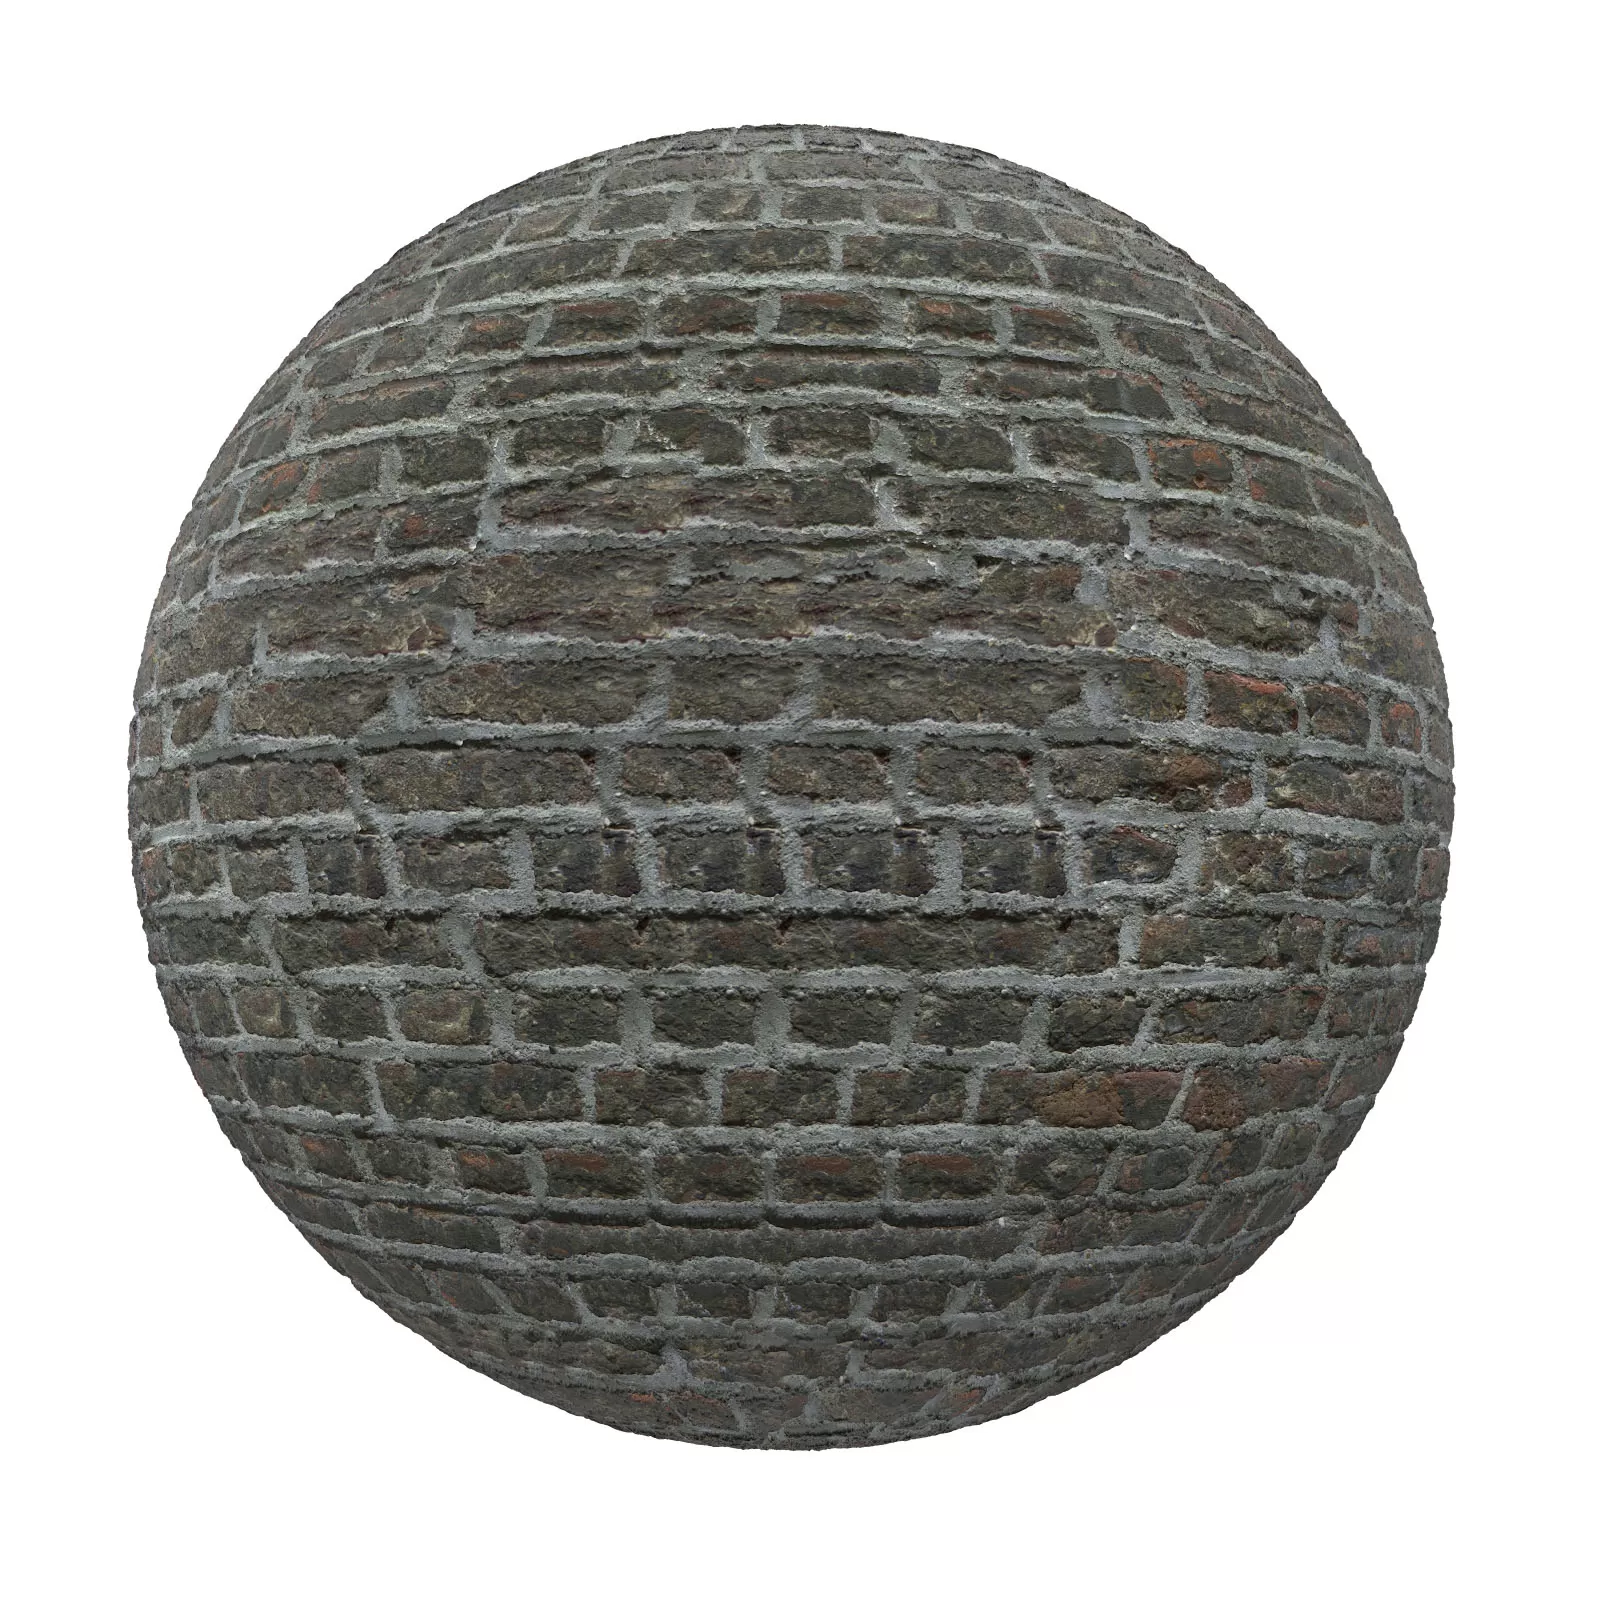 PBR CGAXIS TEXTURES – BRICK – Stone Brick Wall 5